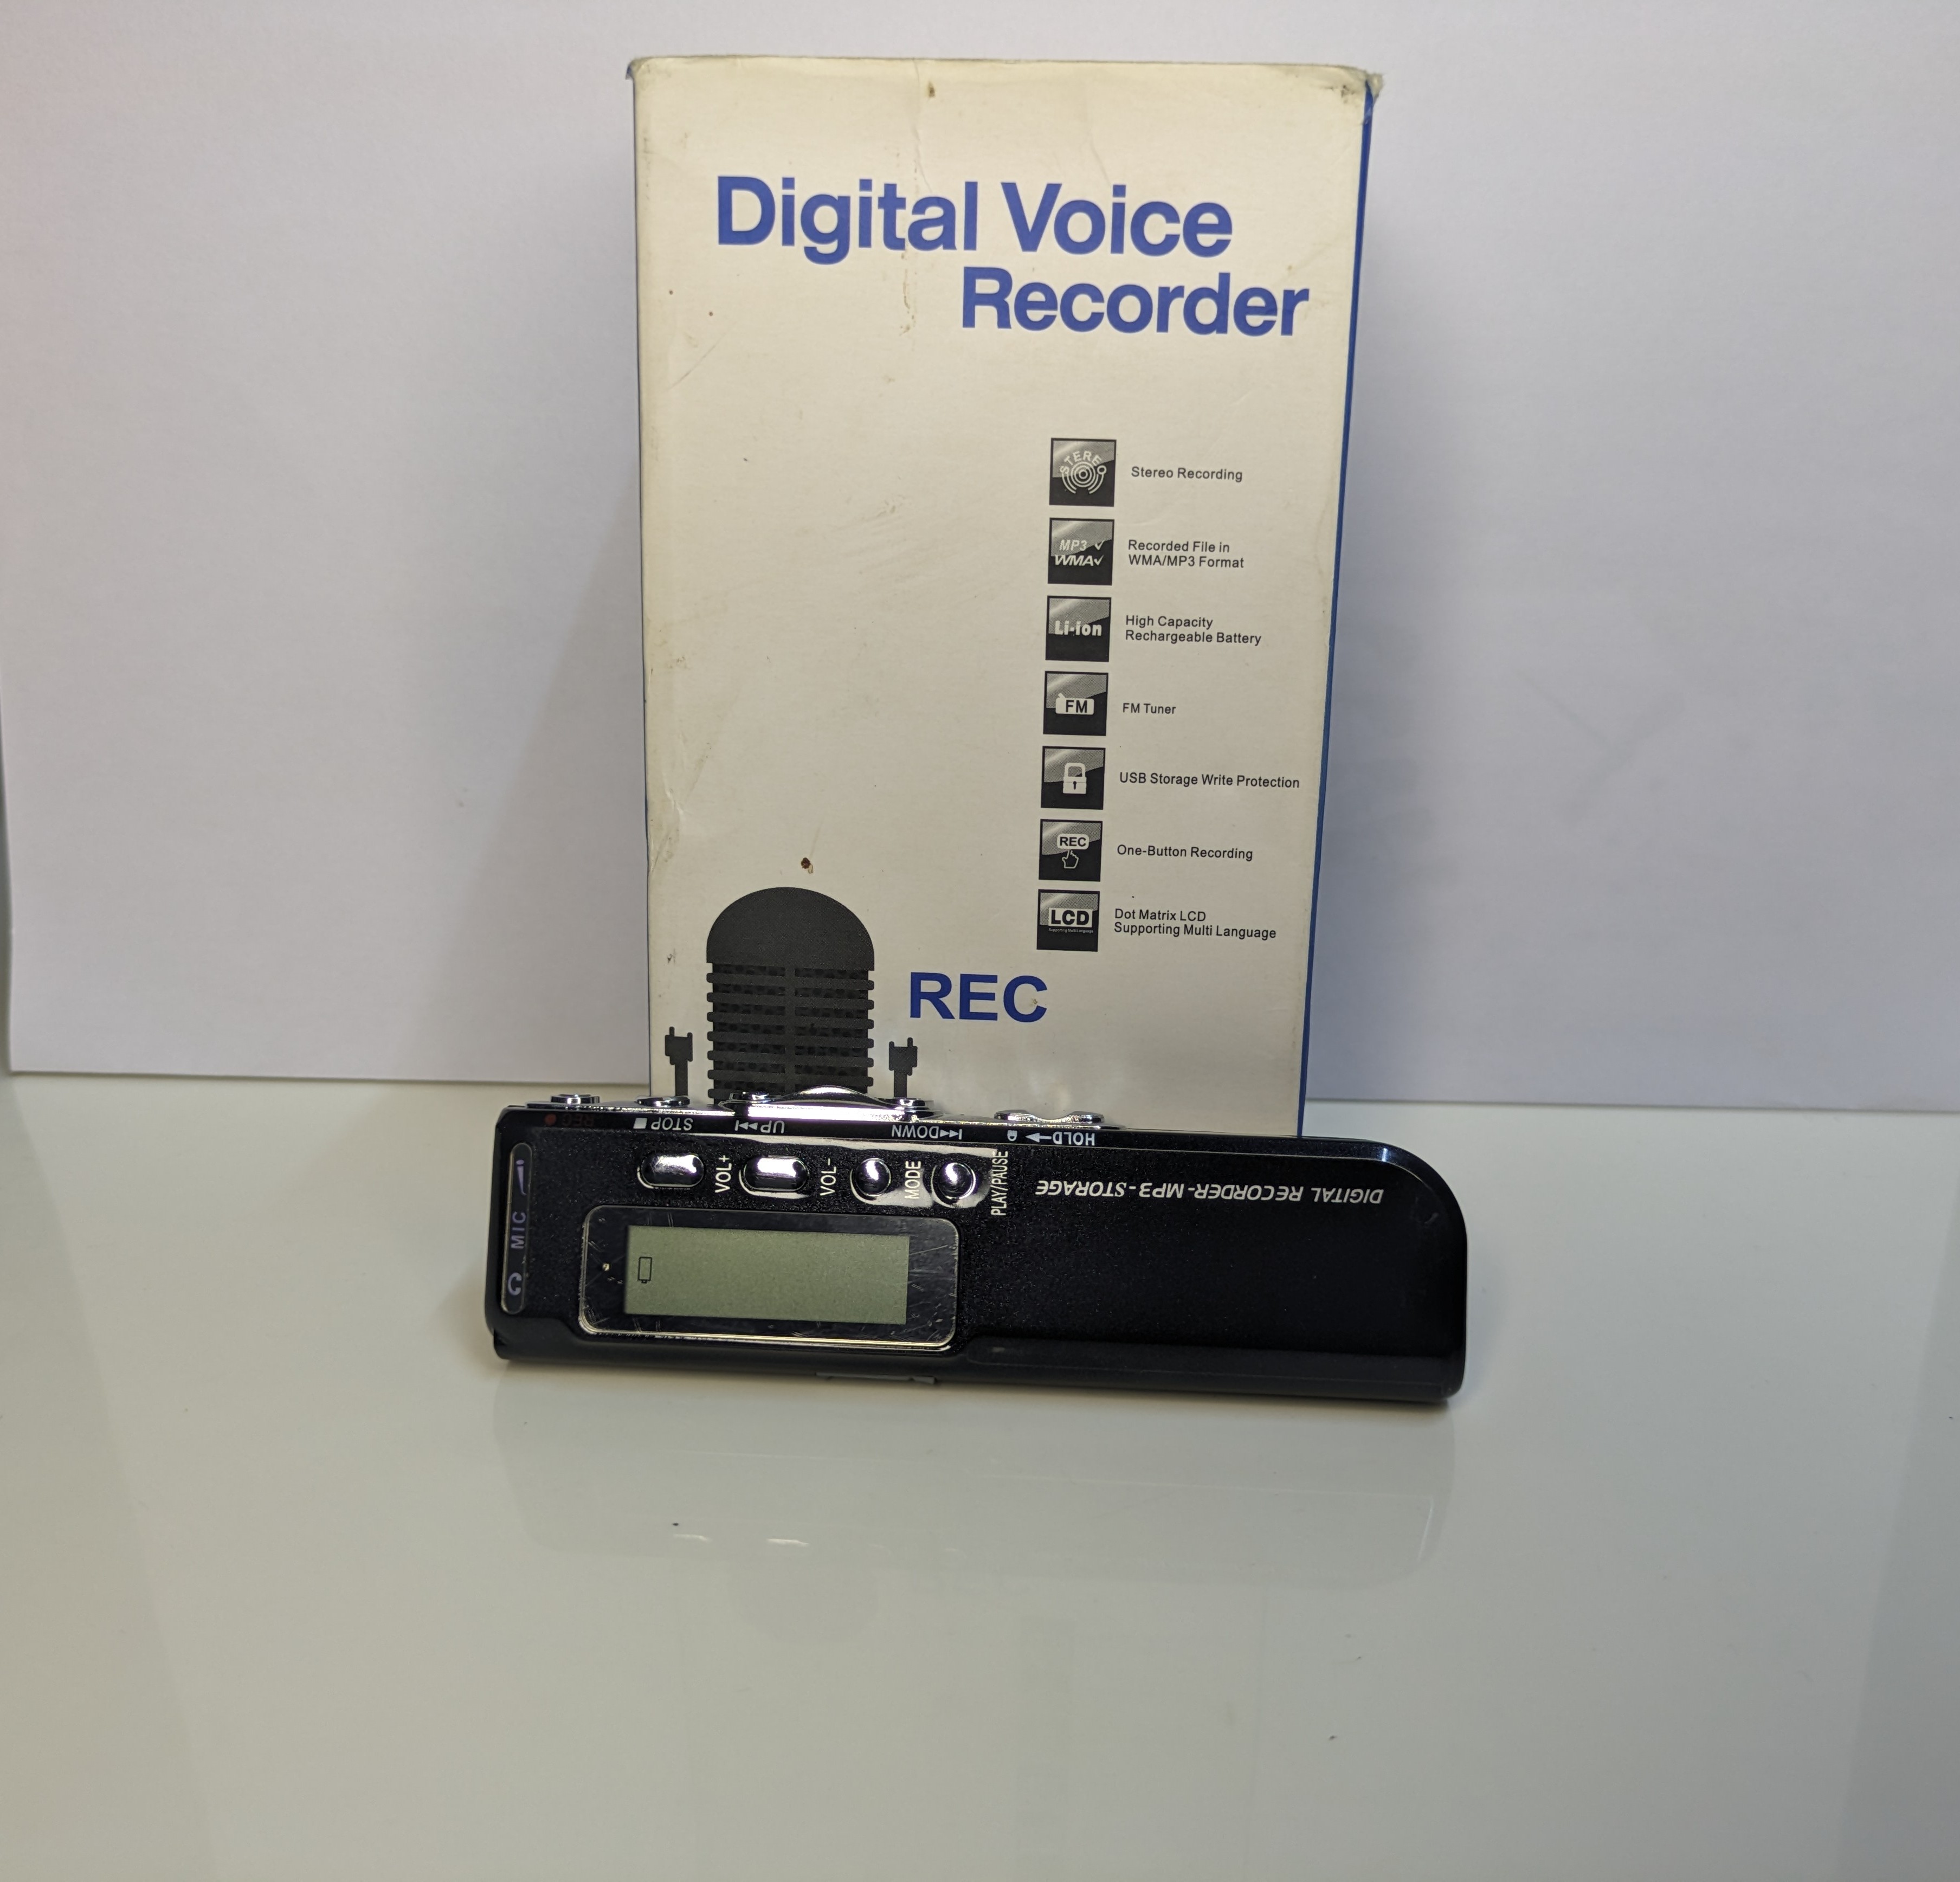 Digital Voice Recorder image